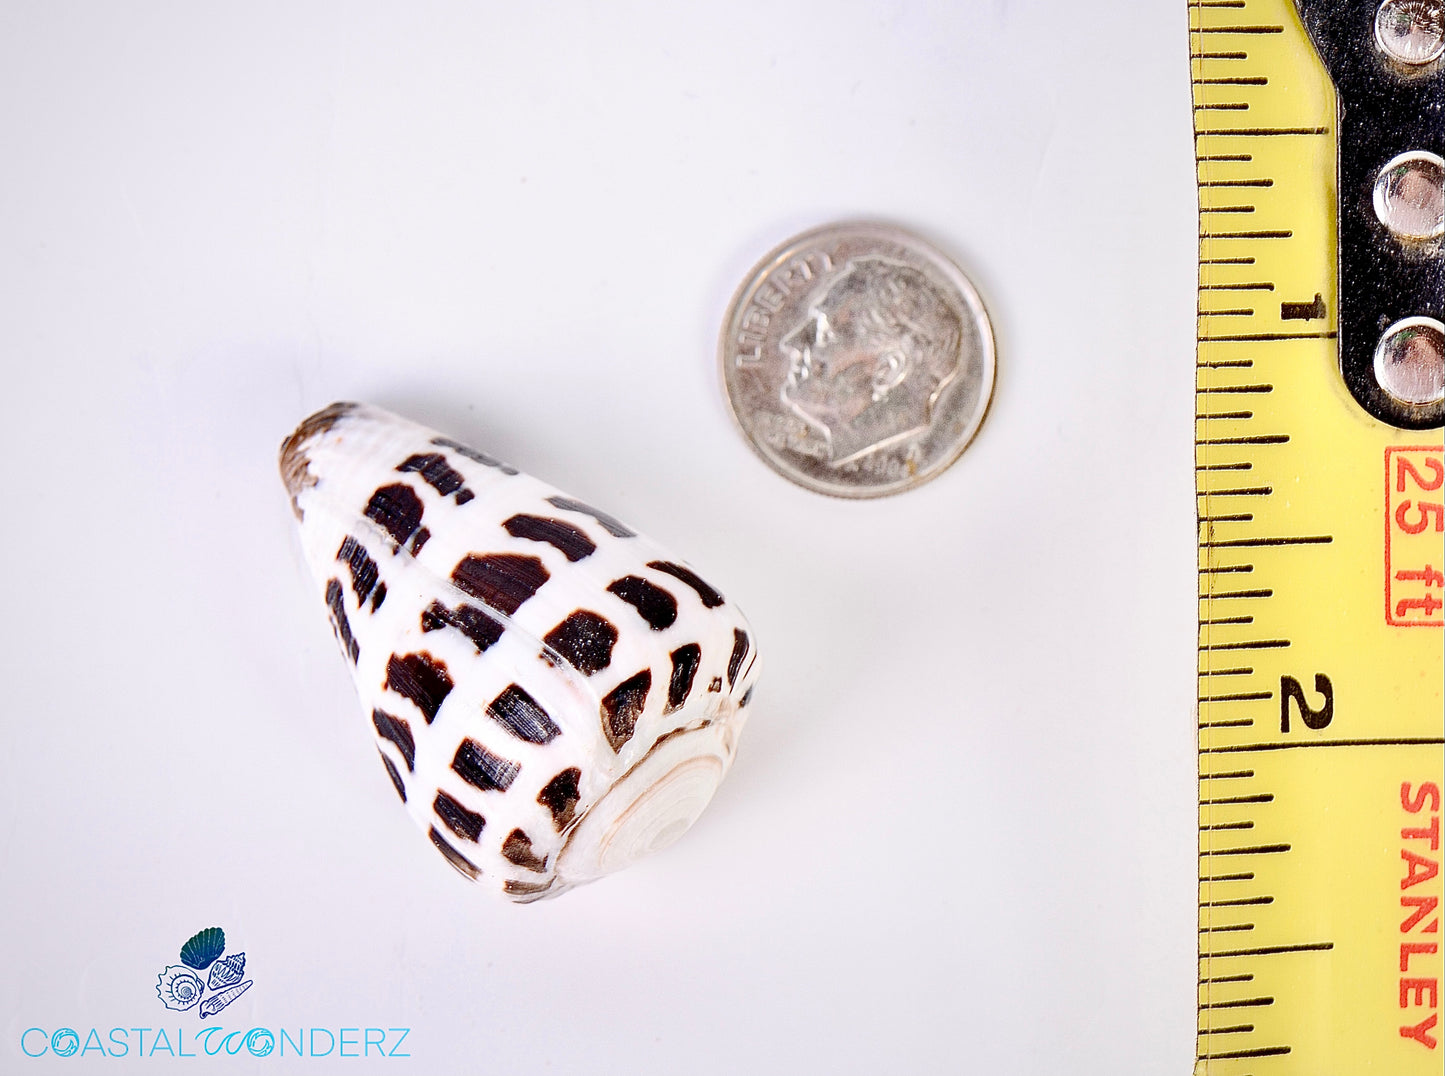 Hebrew Cone Shell (Cardium Cardissa)